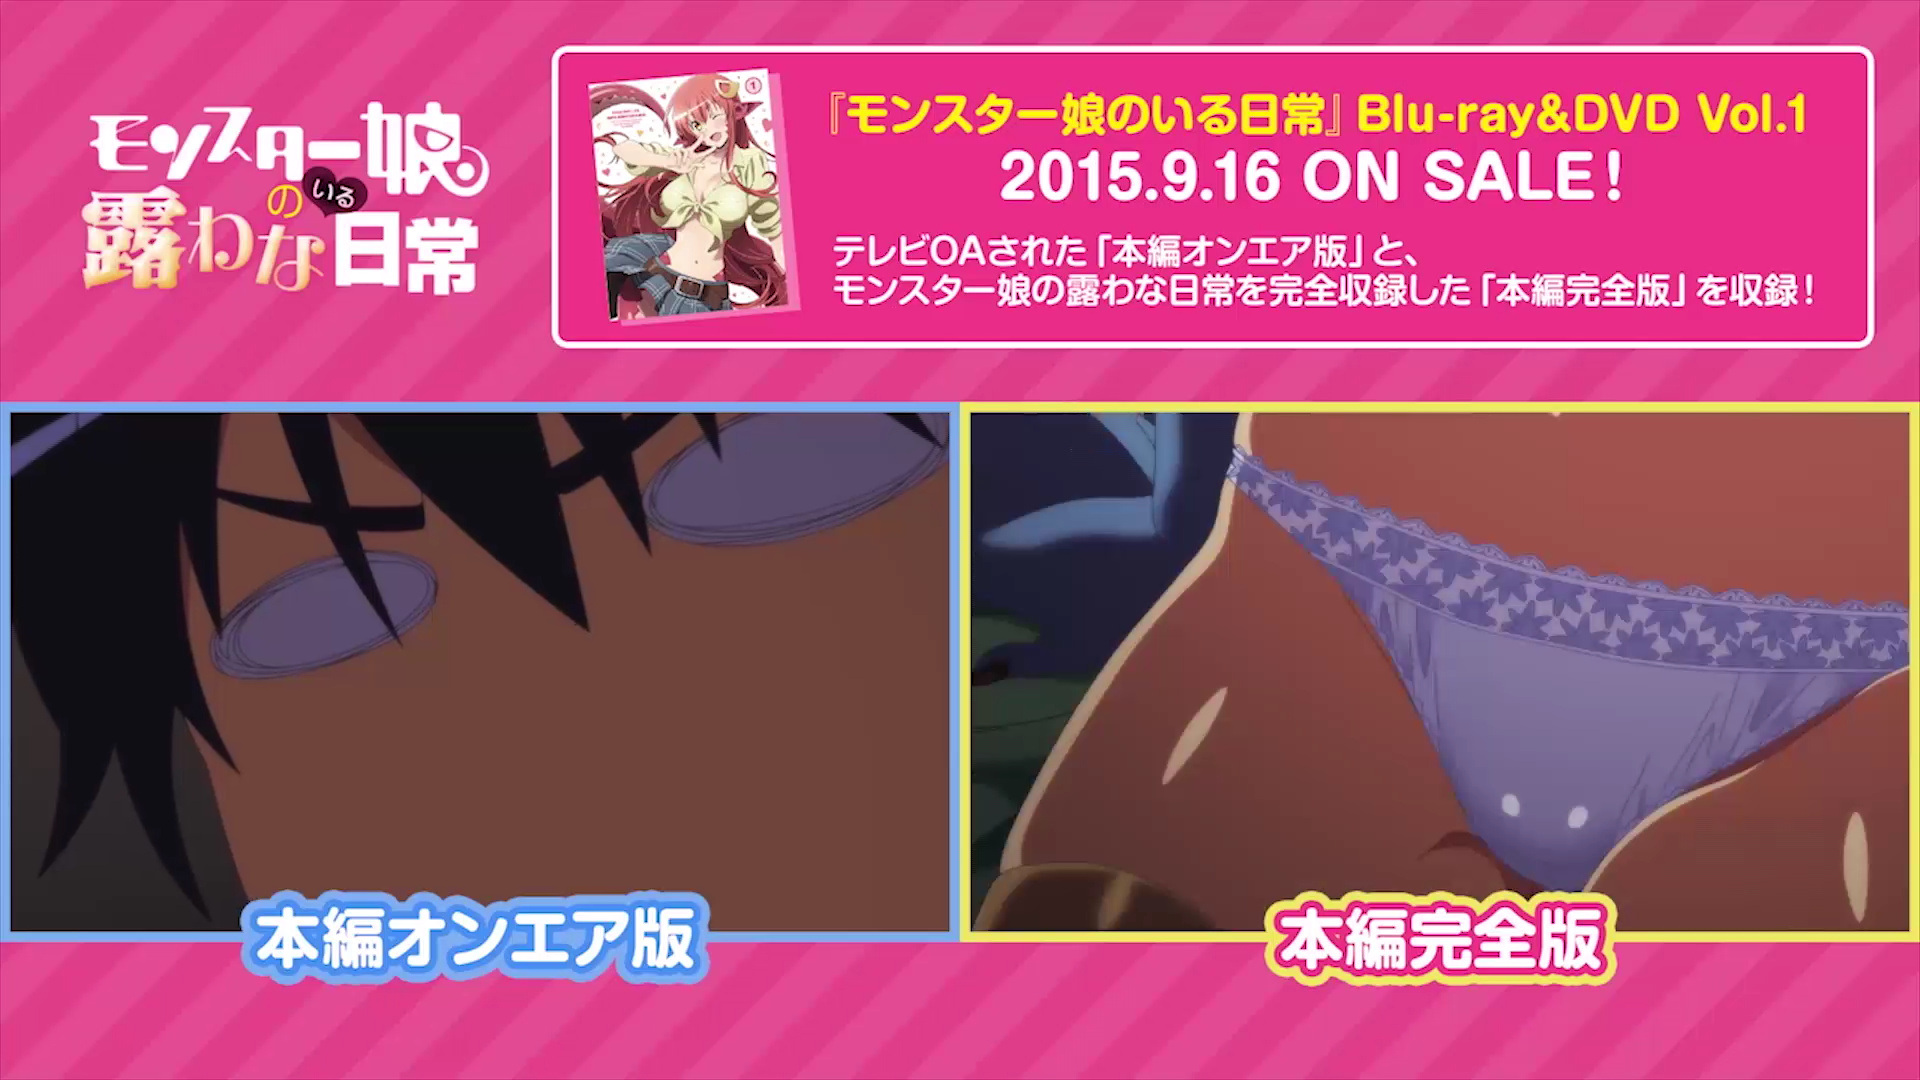 TV vs Blu-Ray Monster Musume anime blu-ray volume 1 uncensored 18